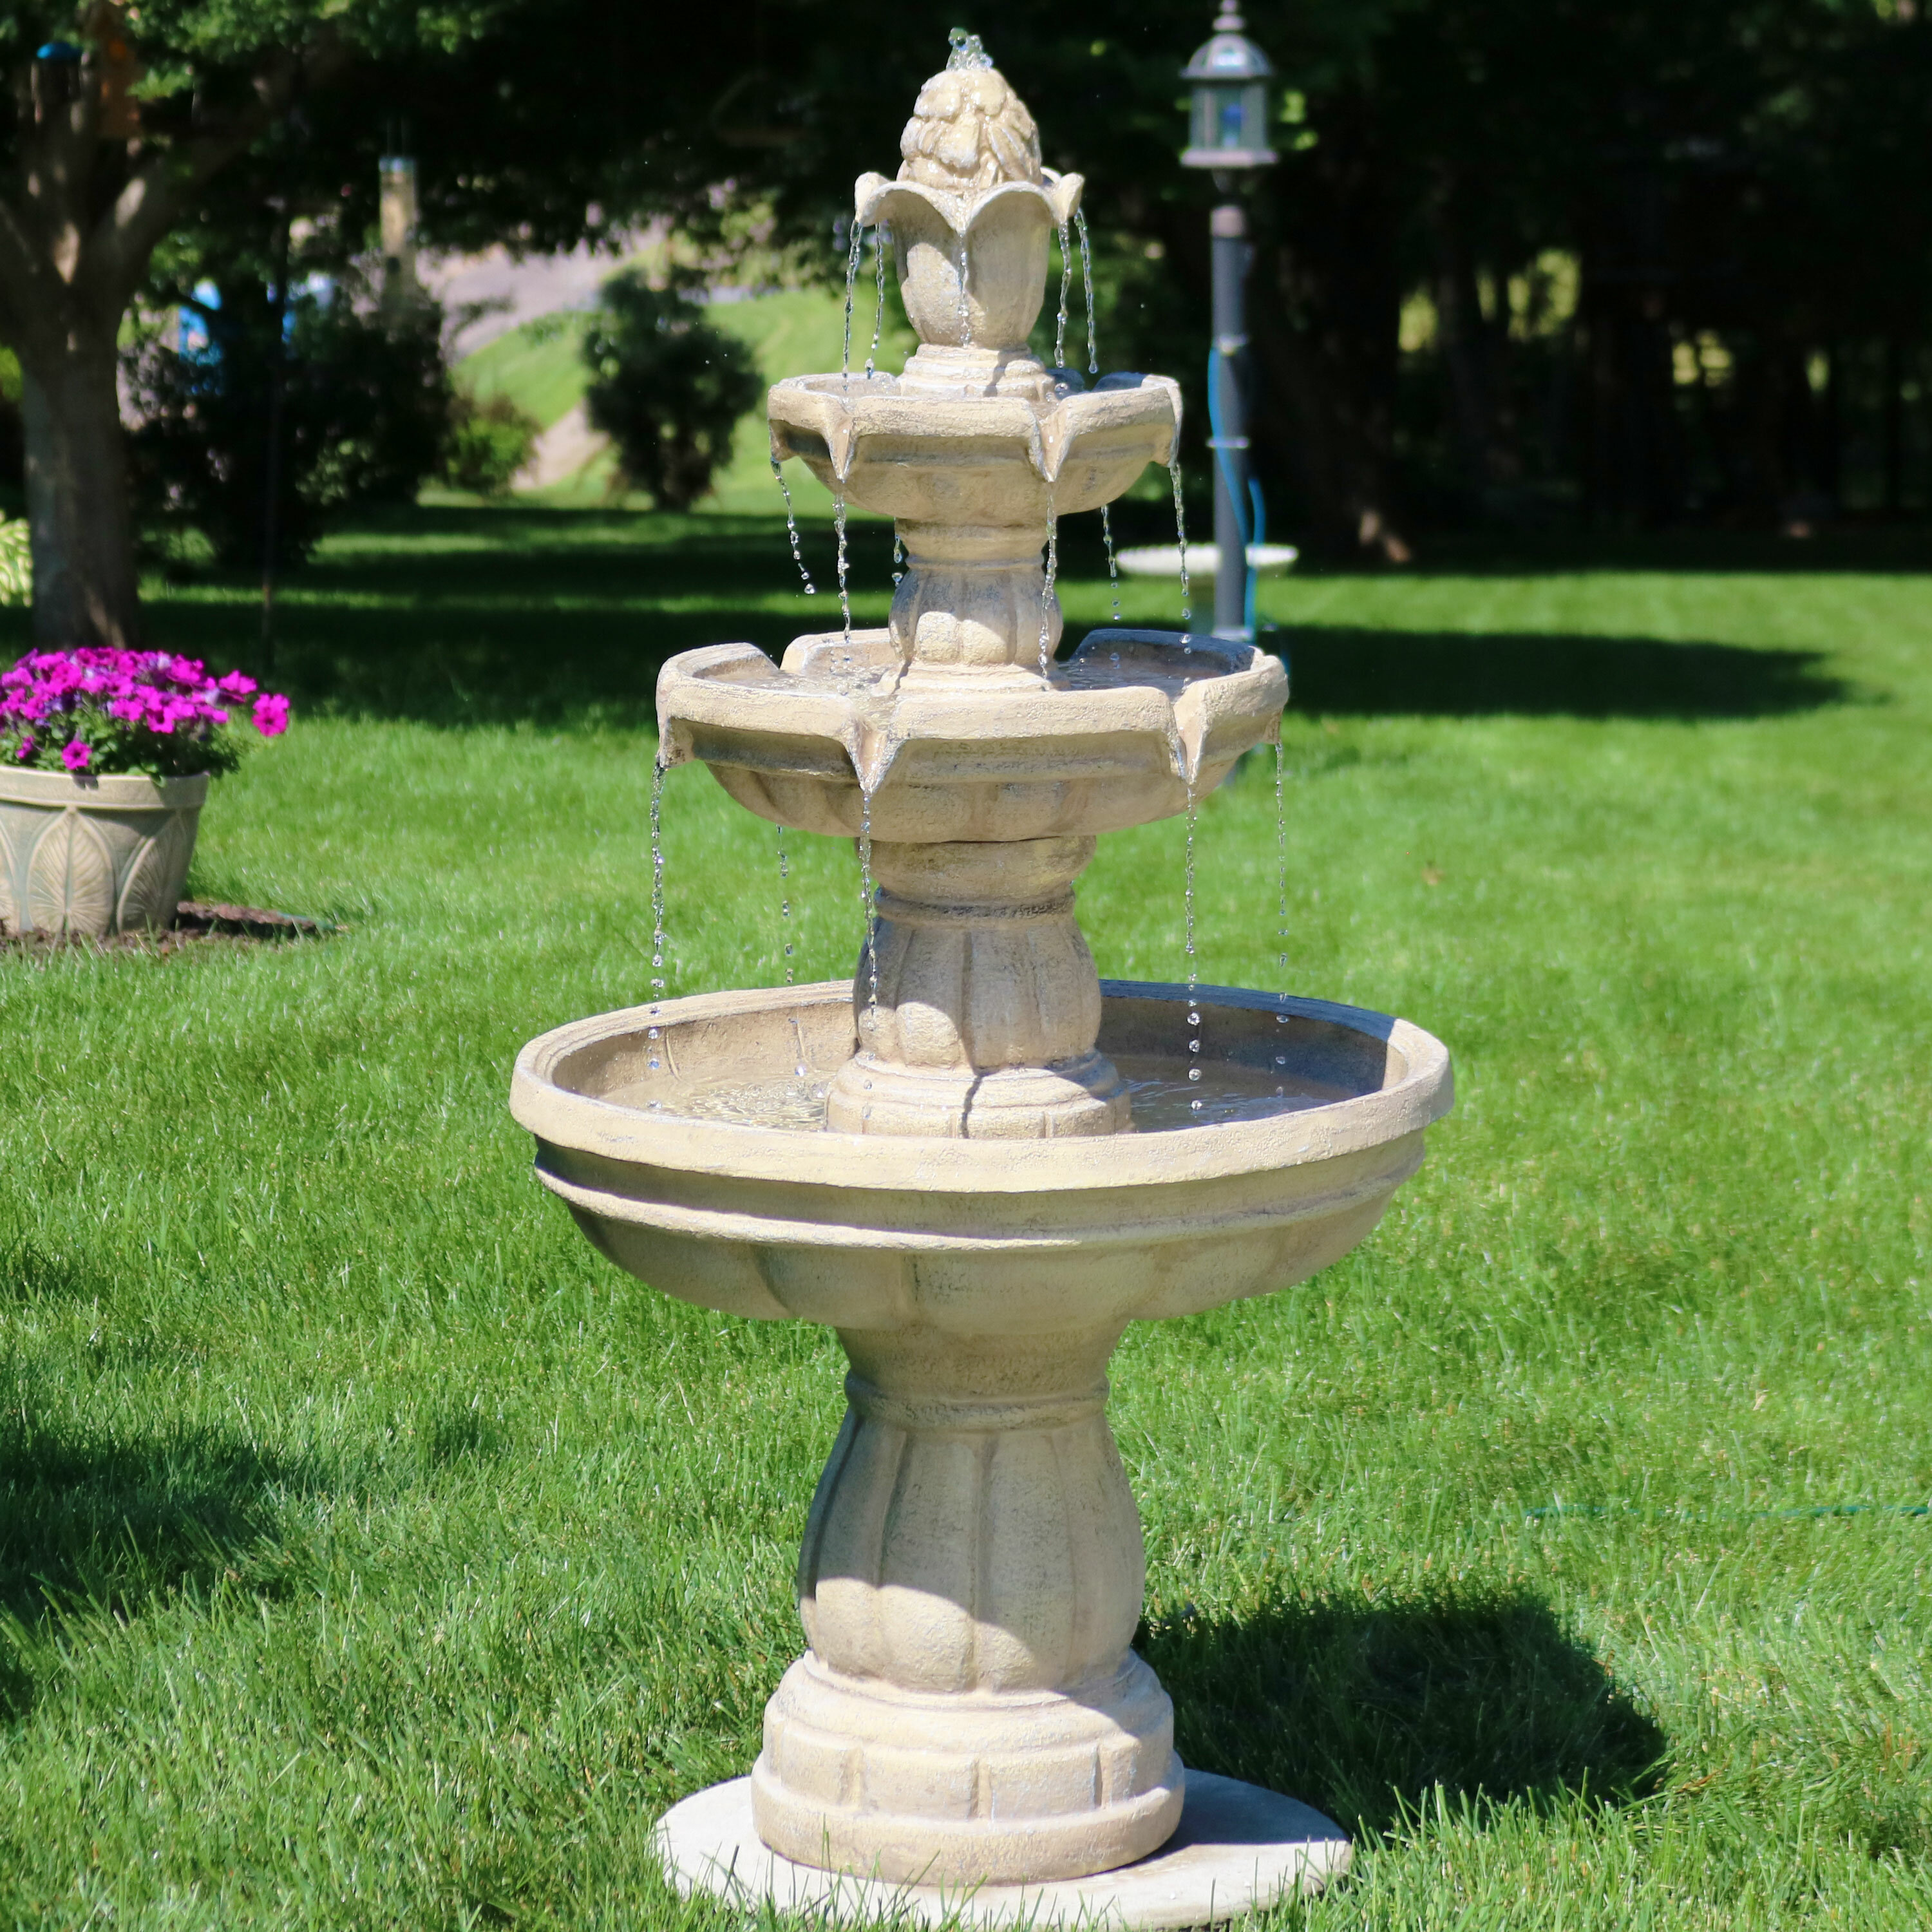 Bird Bath 3 Tier Water Fountain in out Door Patio Garden Decor Electric Pump for sale online 